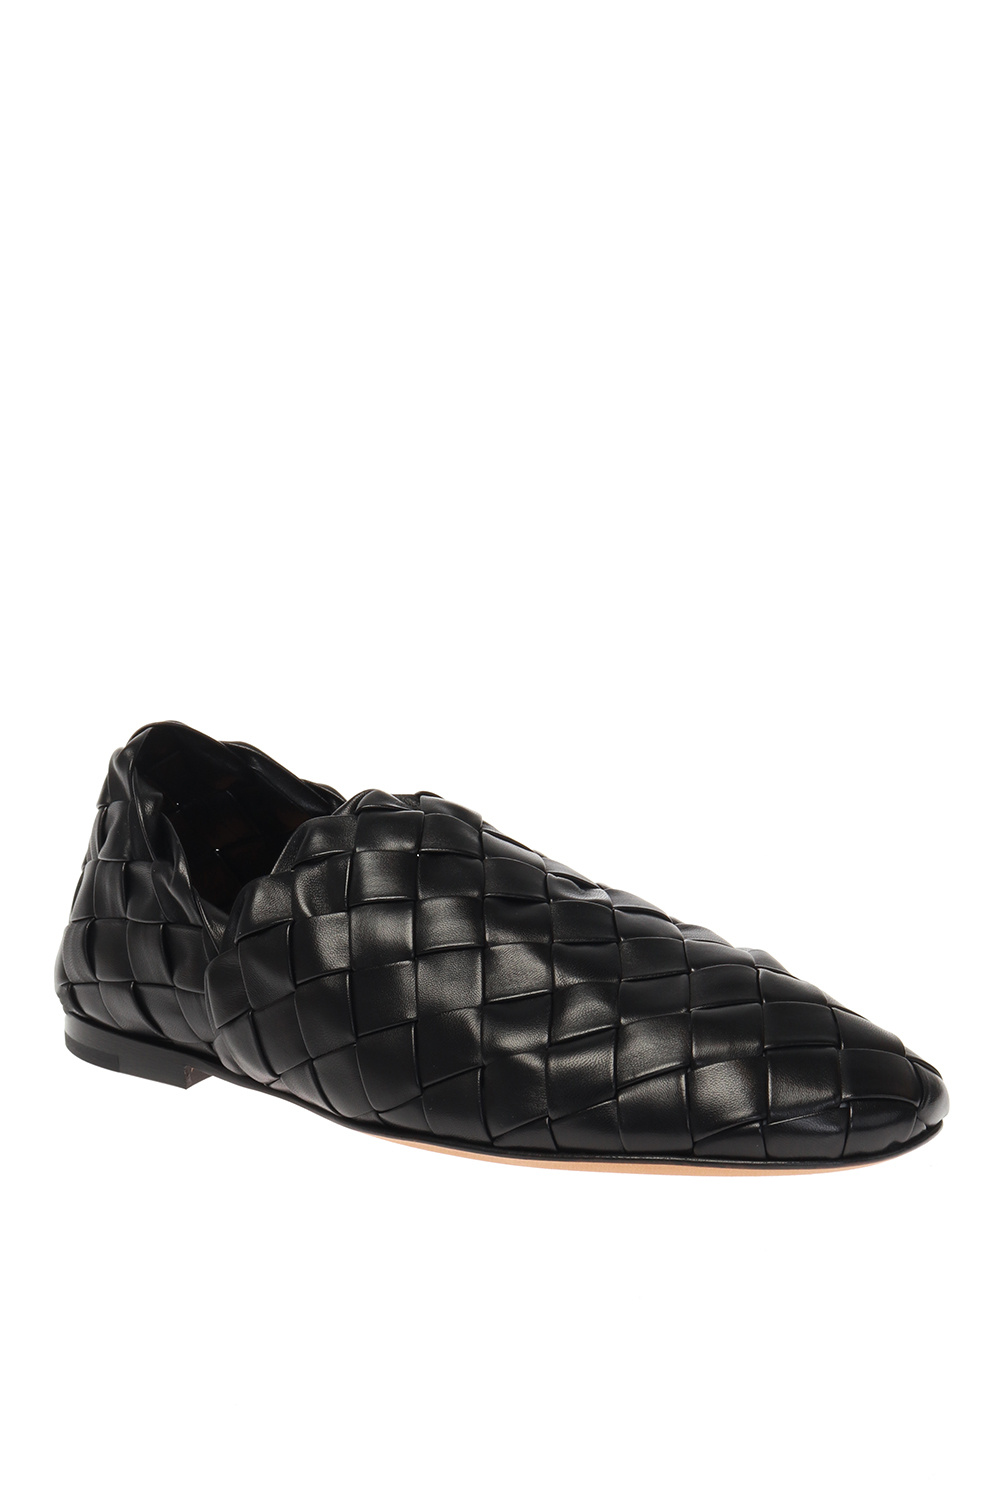 Bottega Veneta Leather loafers